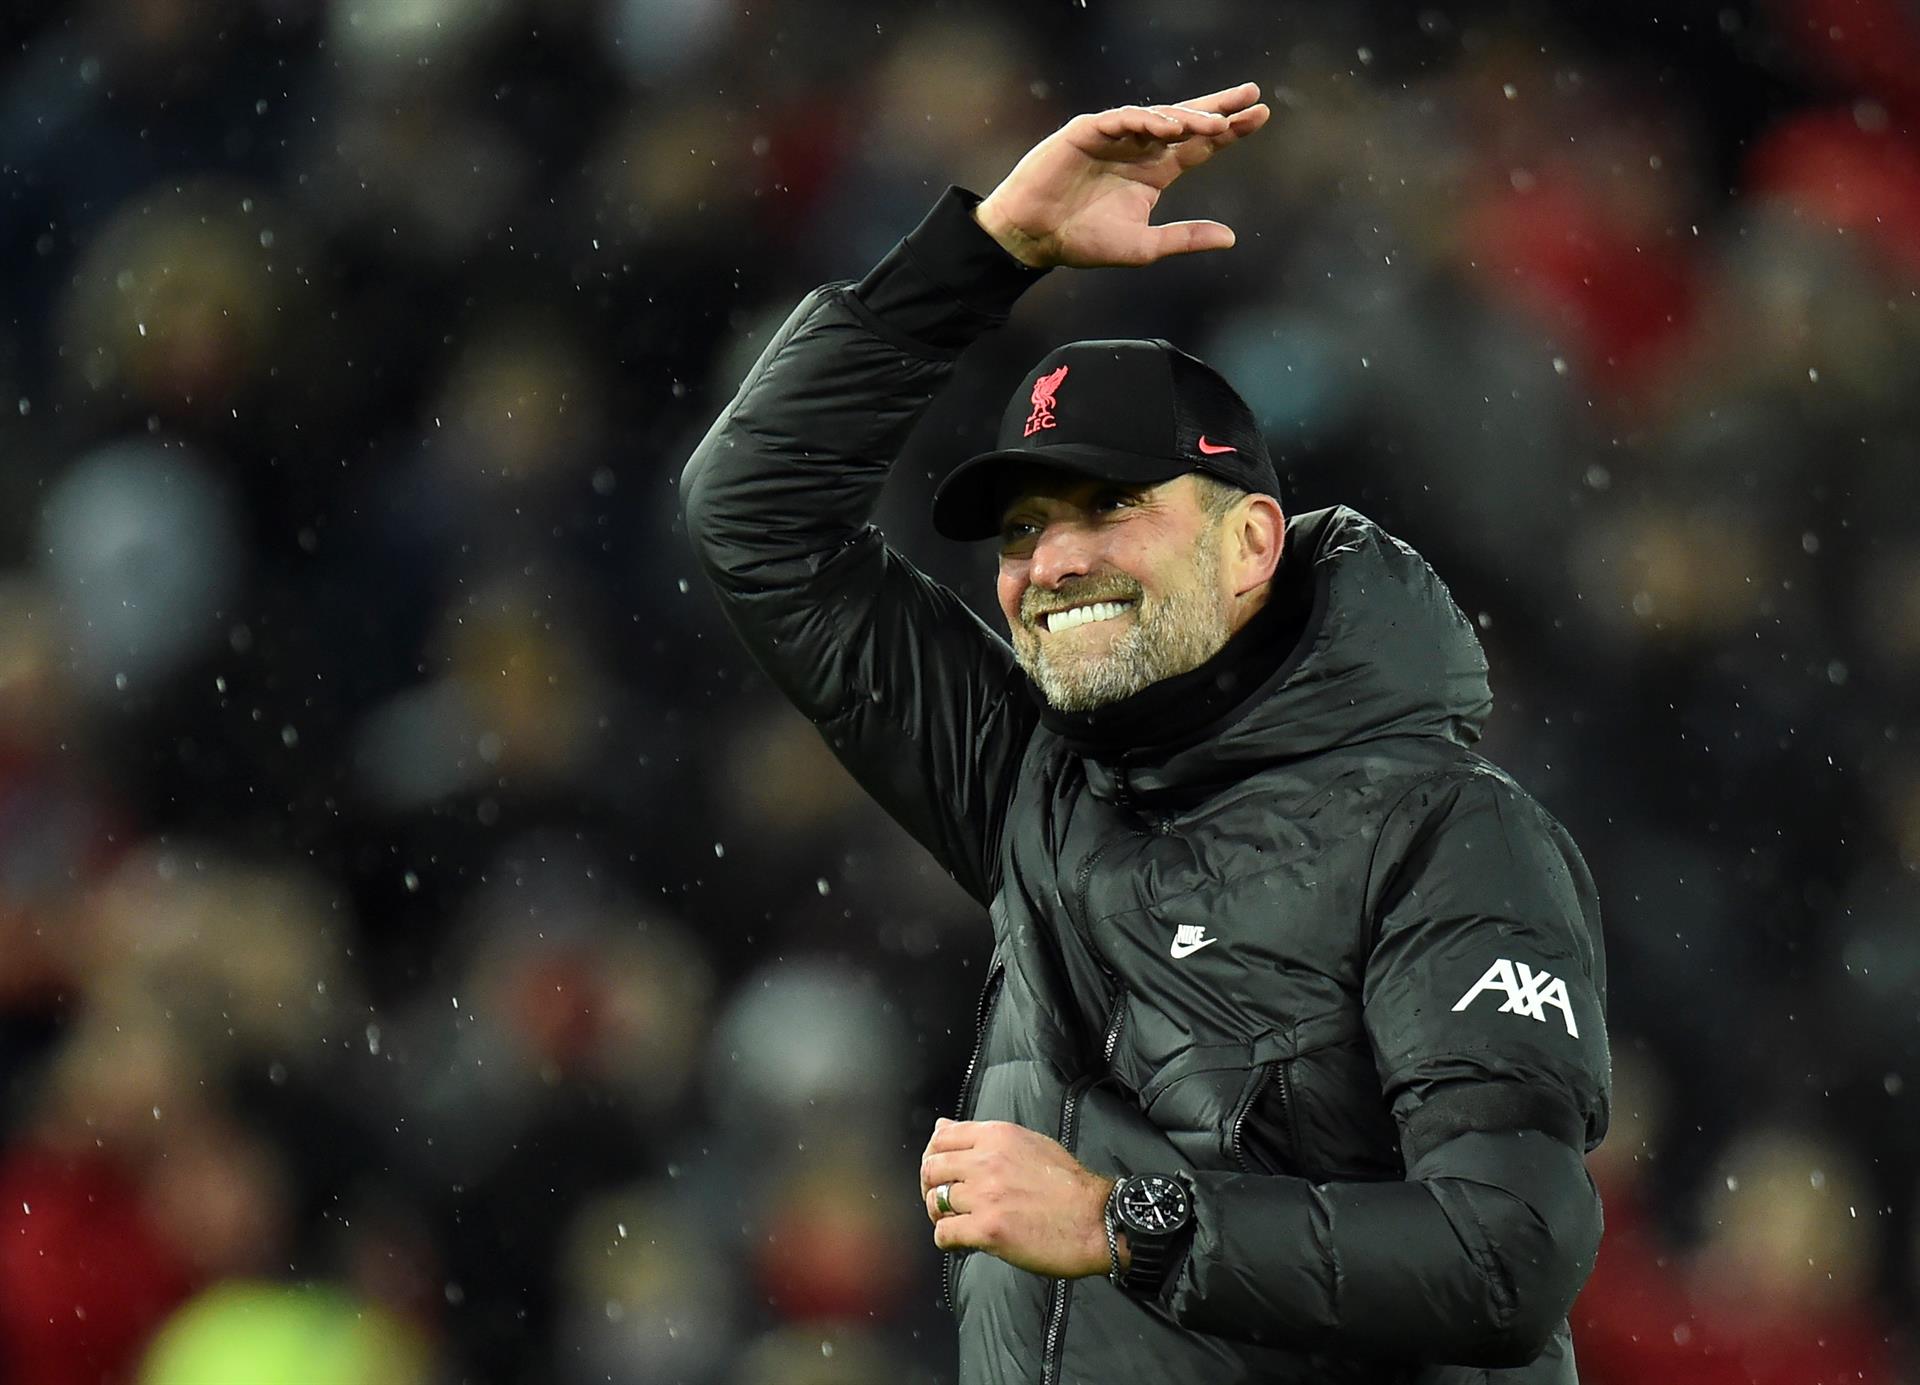 Jürgen Klopp comemorando vitória do Liverpool